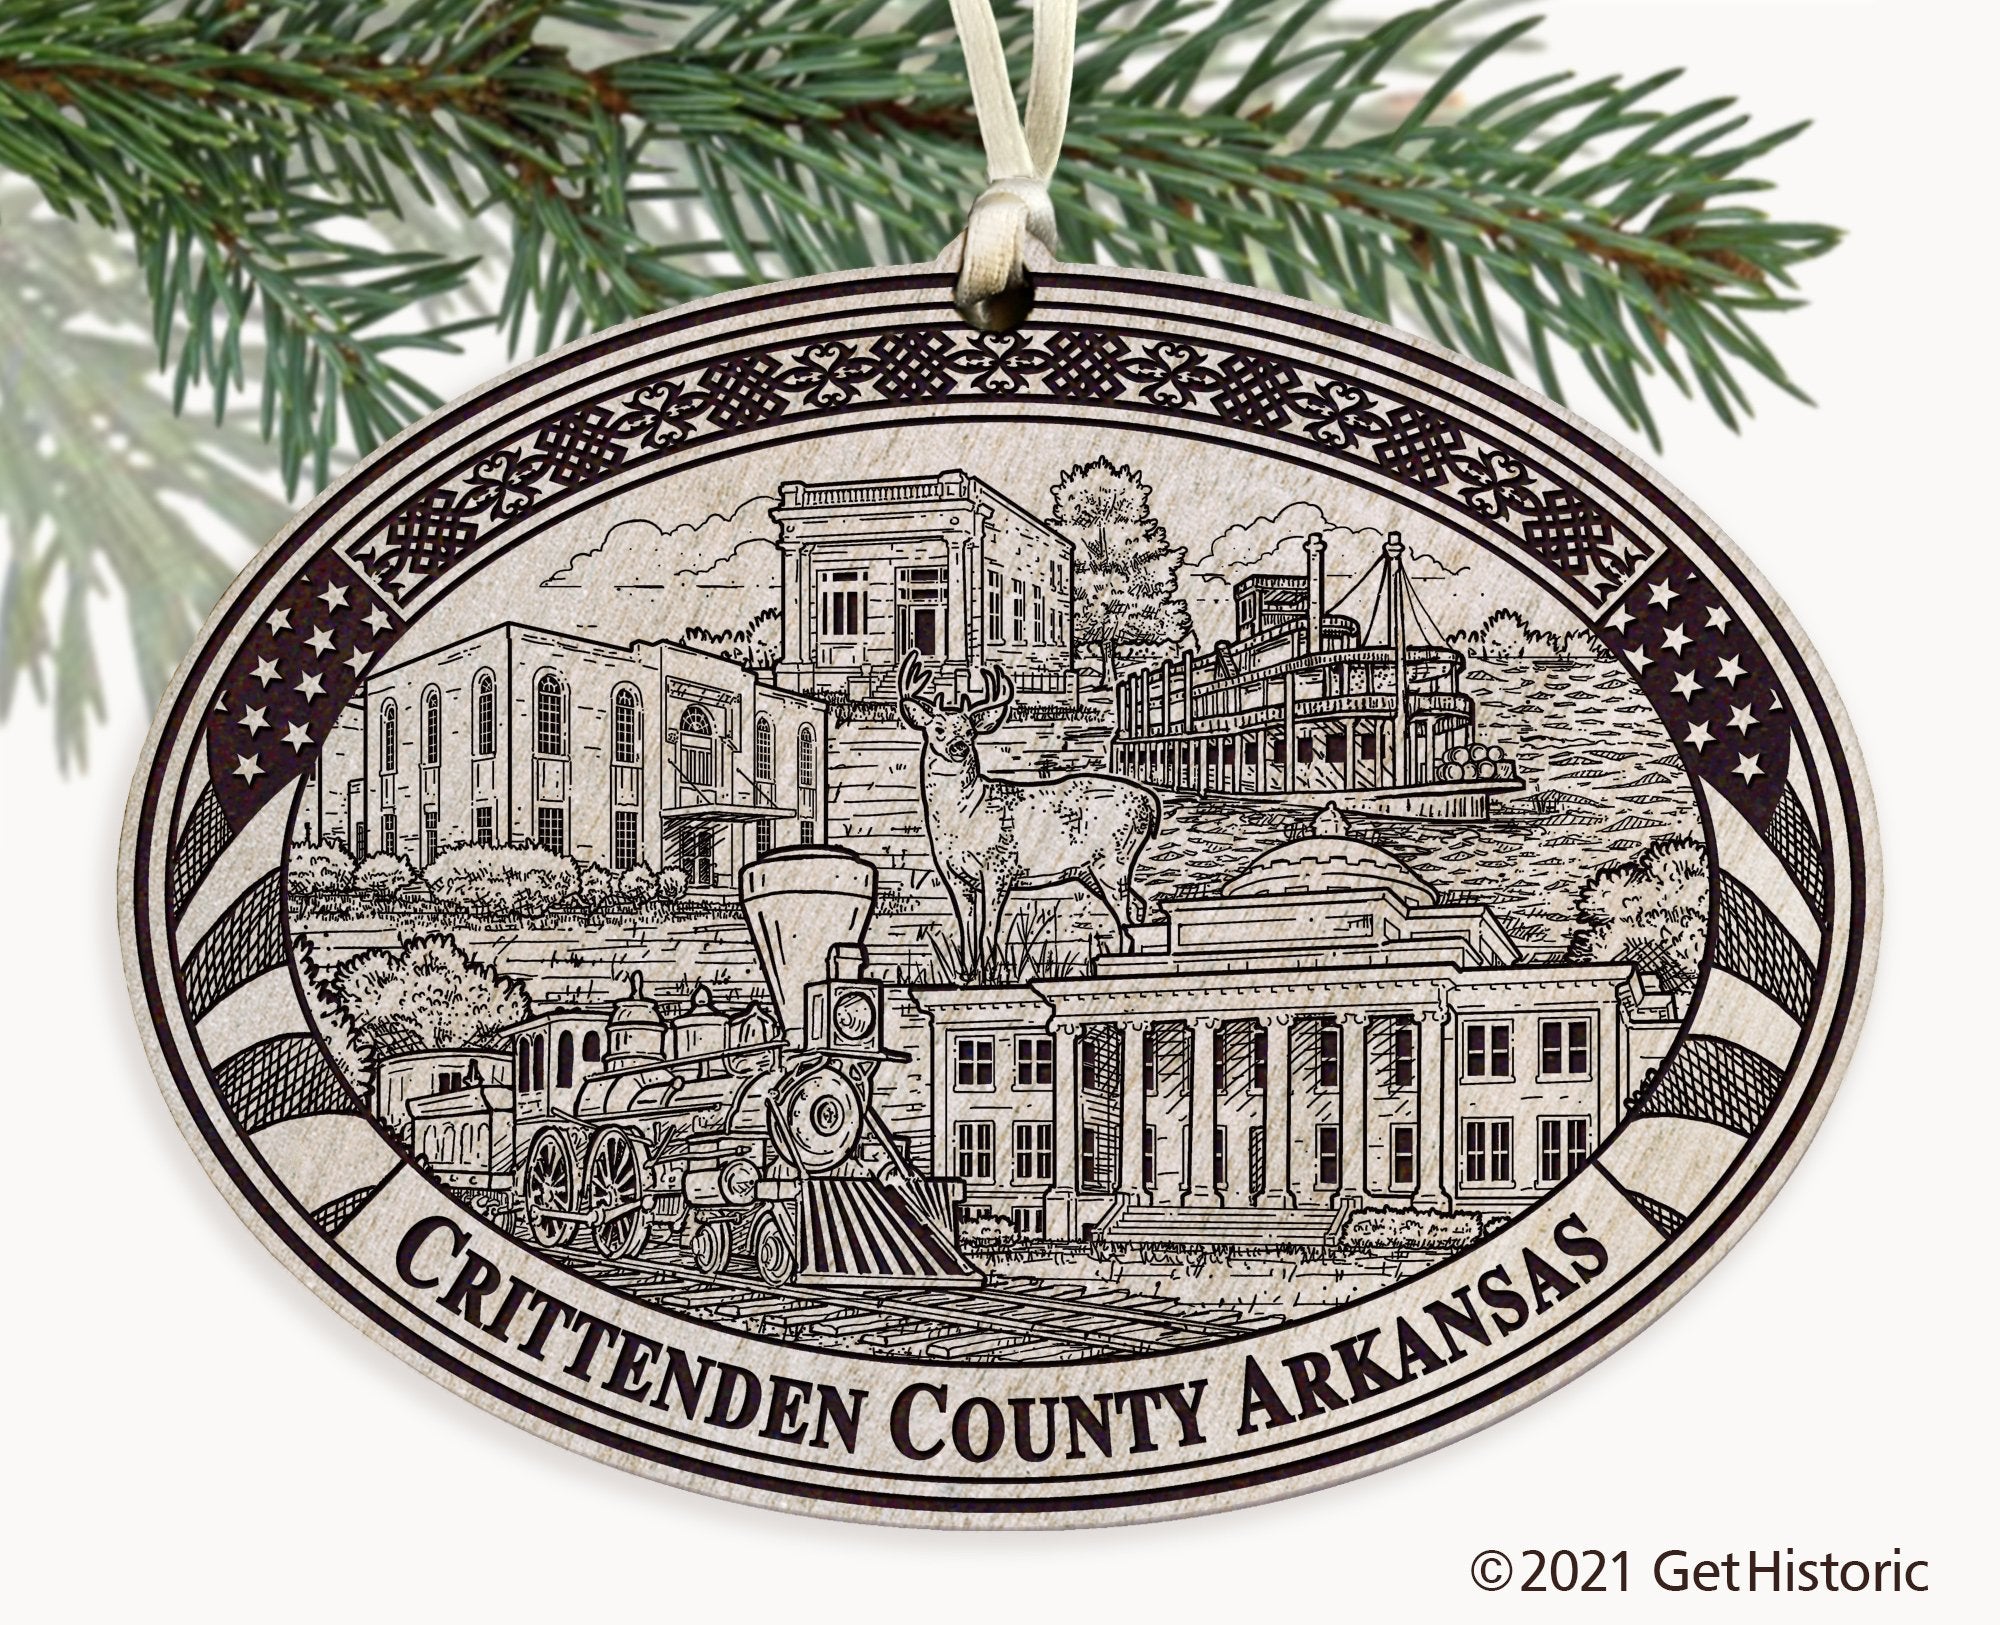 Crittenden County Arkansas Engraved Ornament